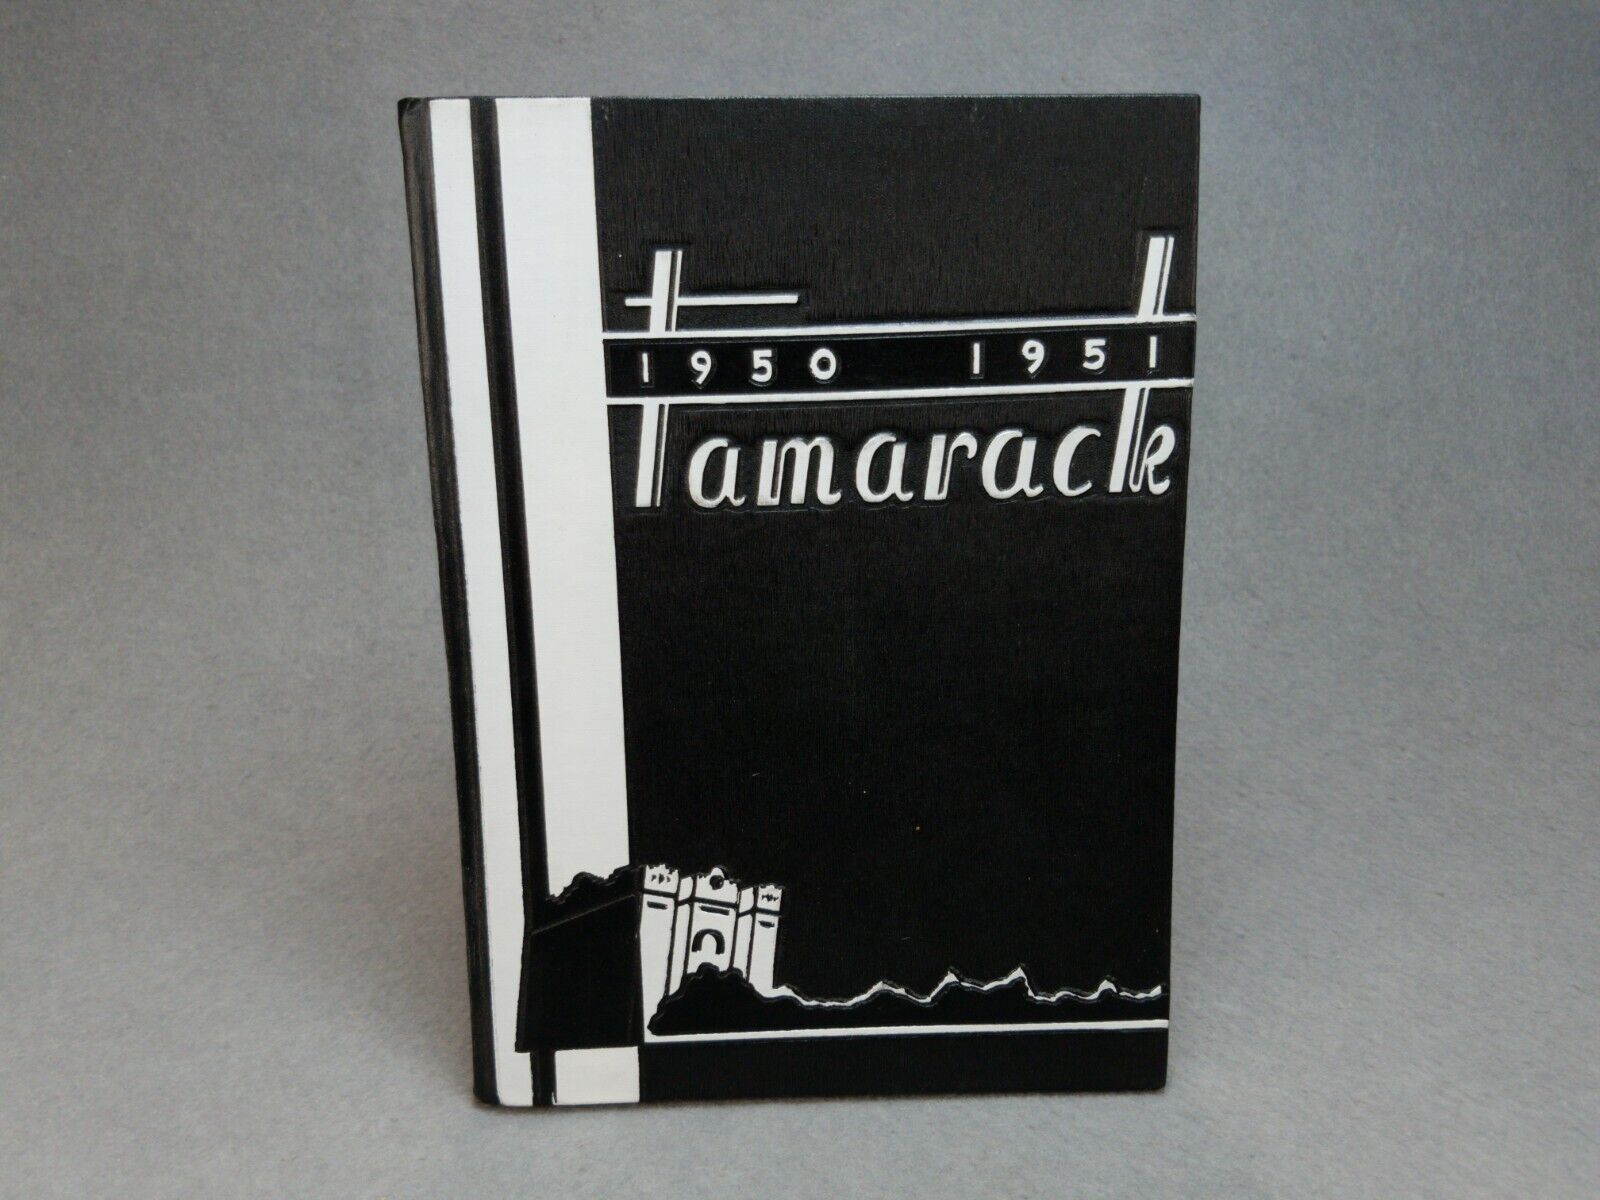 1950 1951 Tamarack Yearbook, North Central High School, Spokane Washington